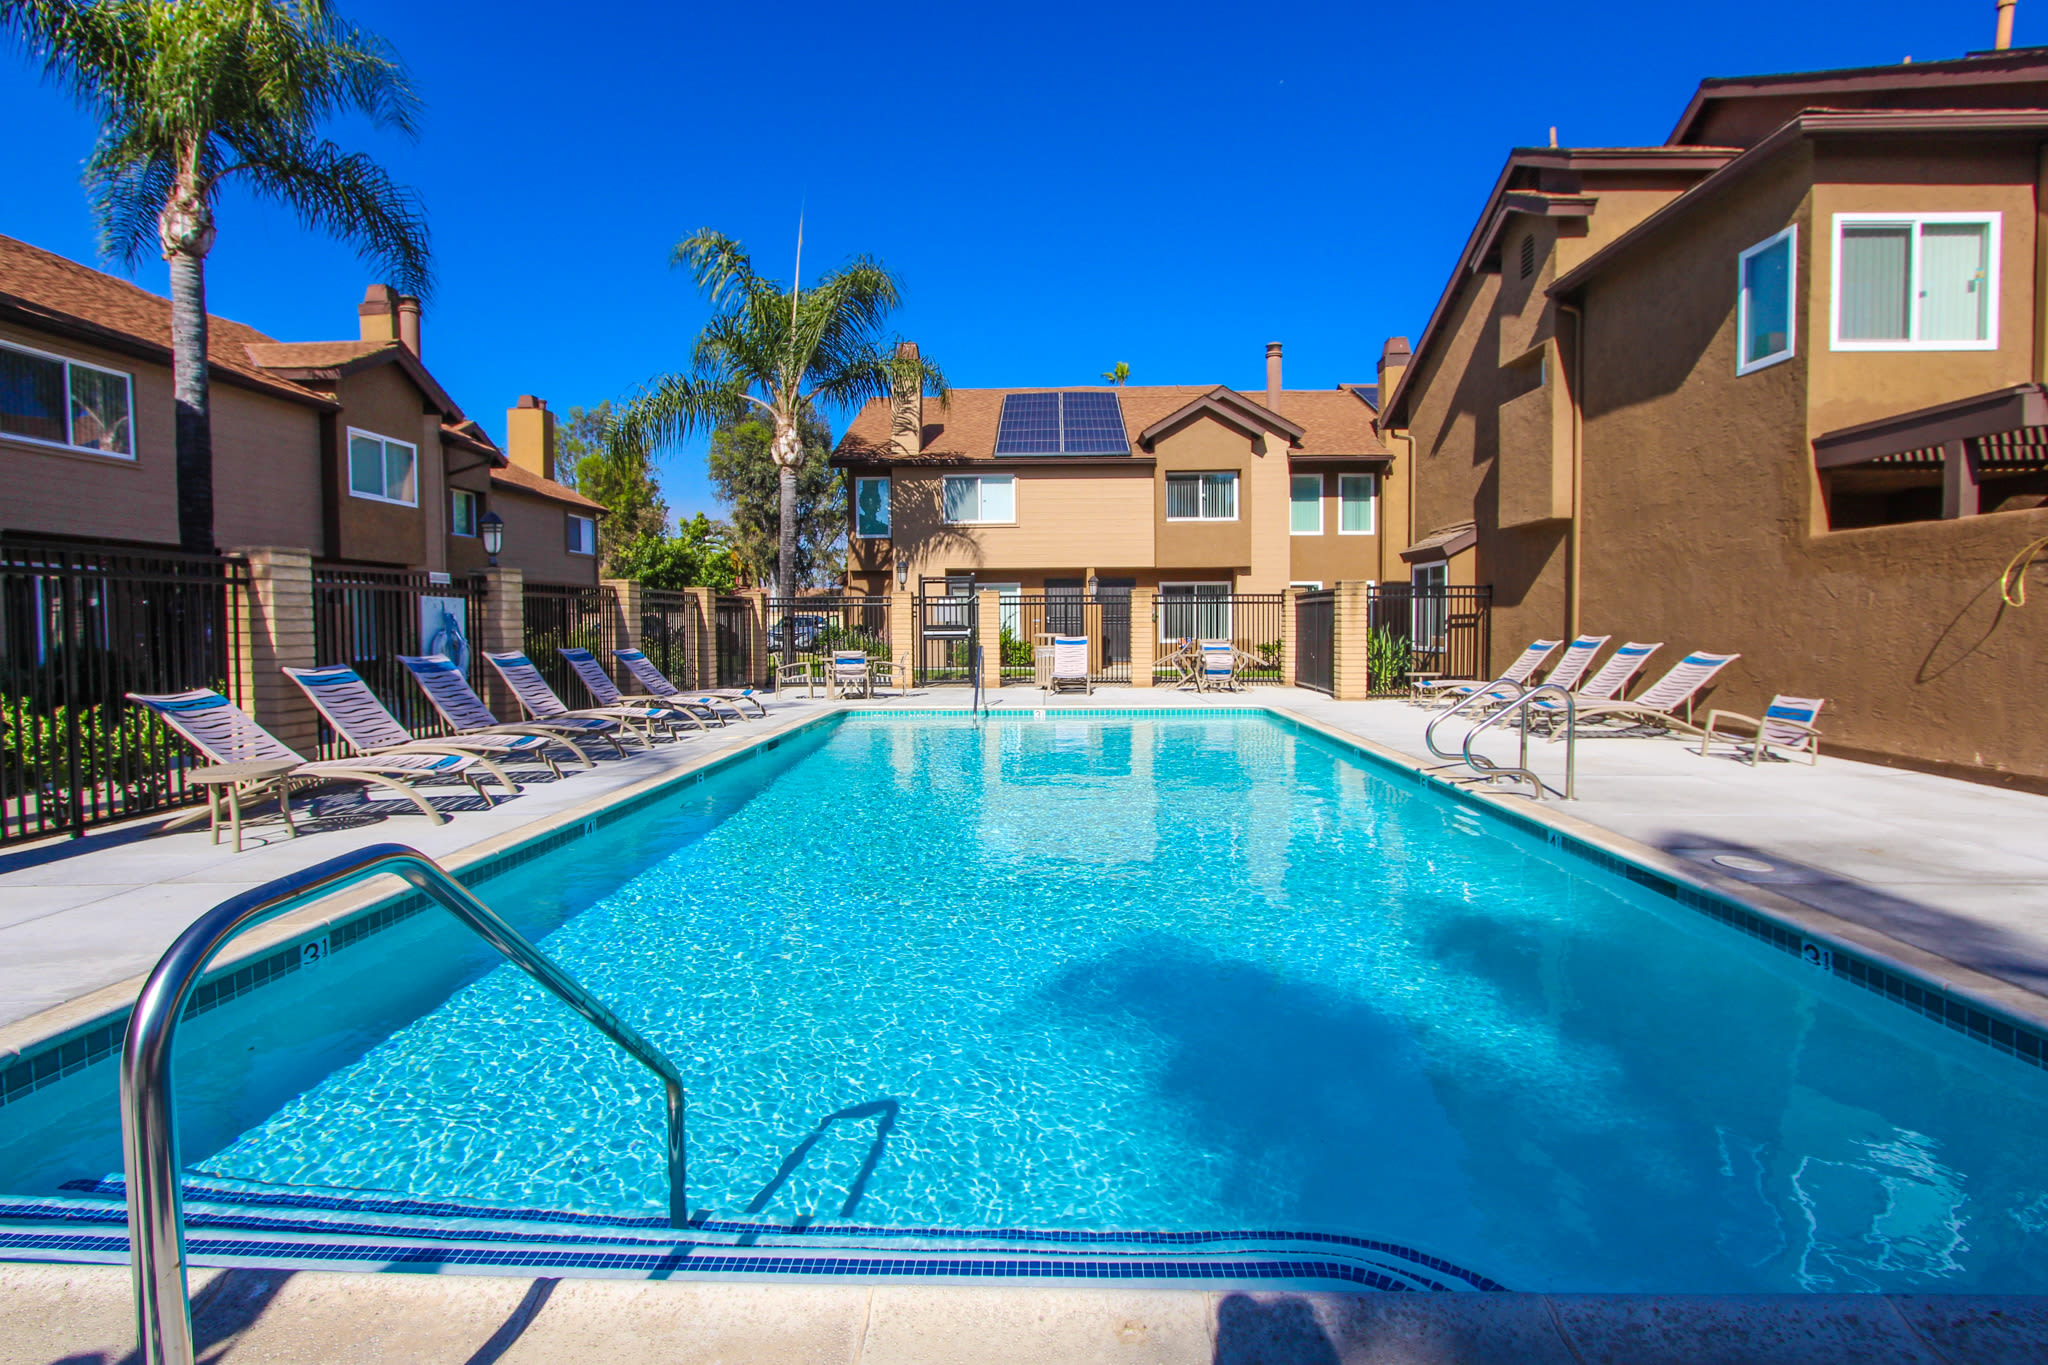 A swimming pool at Woodlake in Lakeside, California